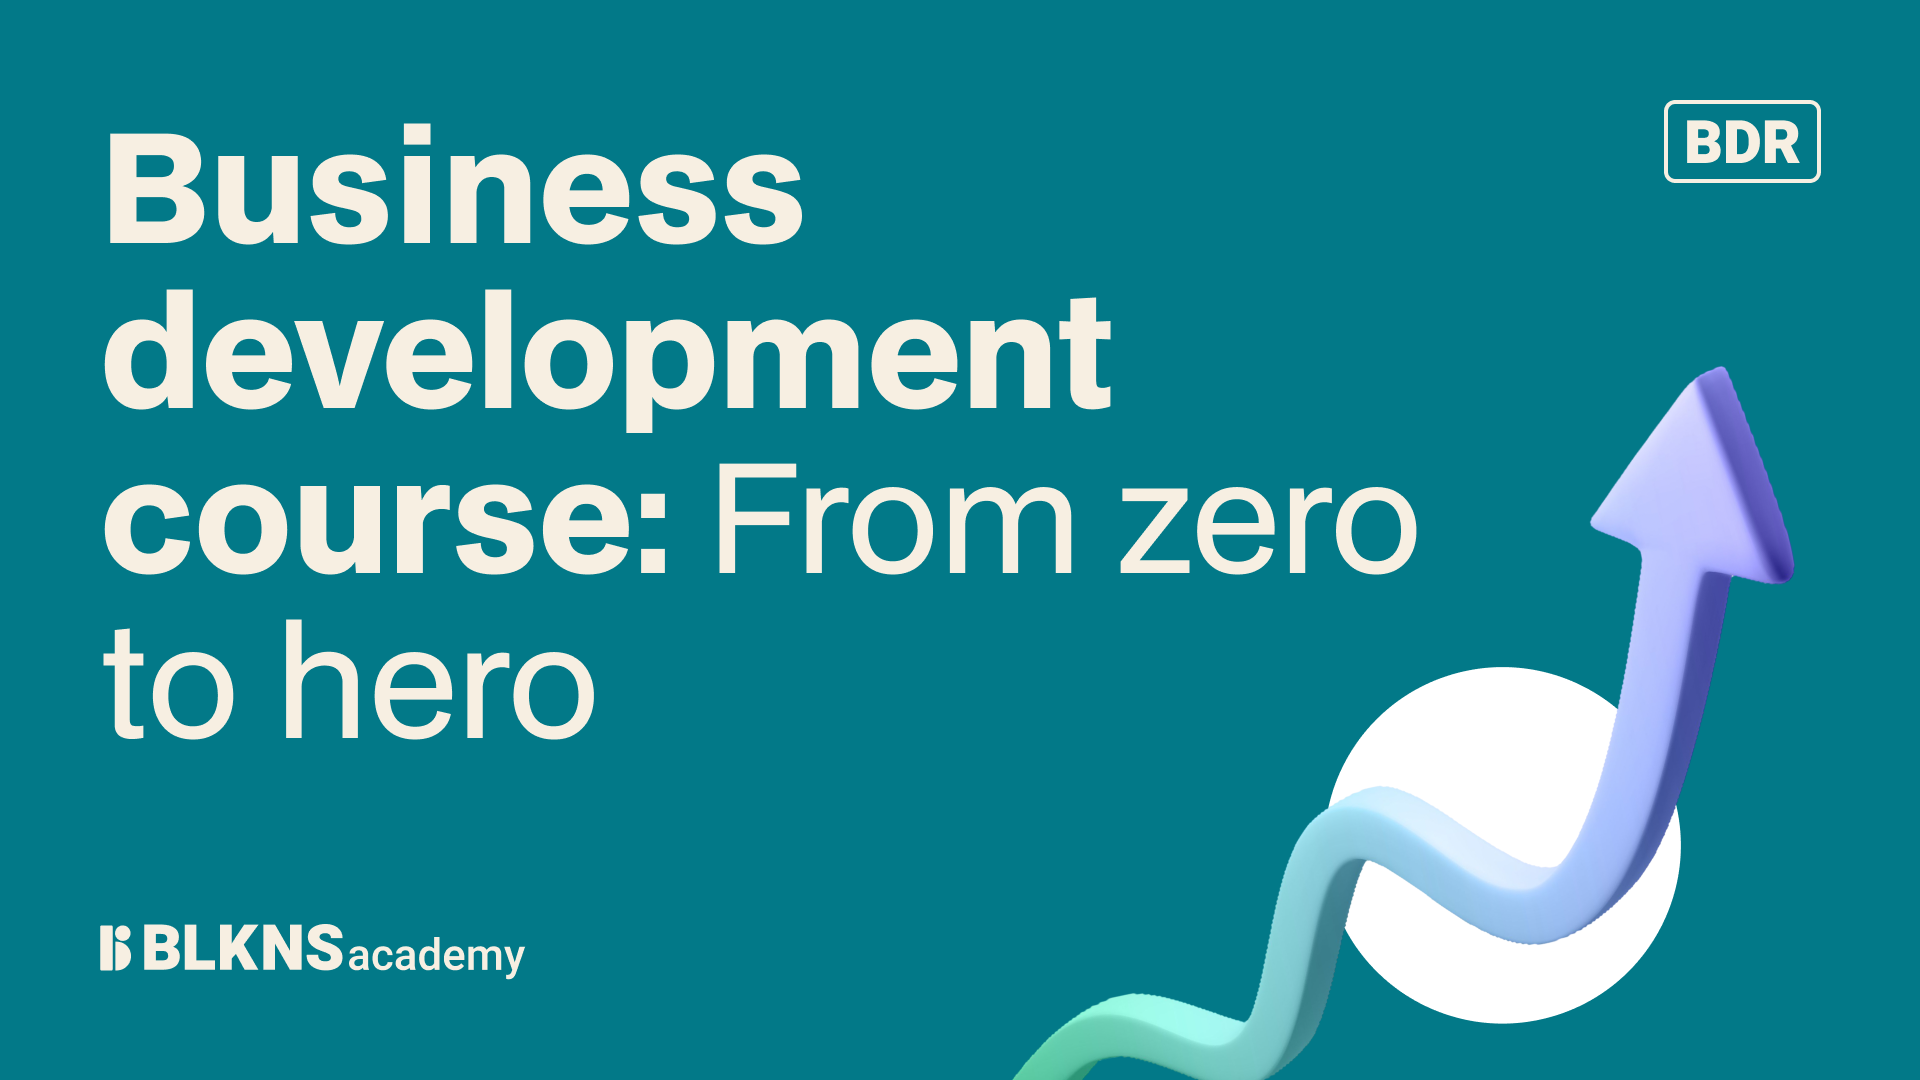 Business development course: From zero to hero